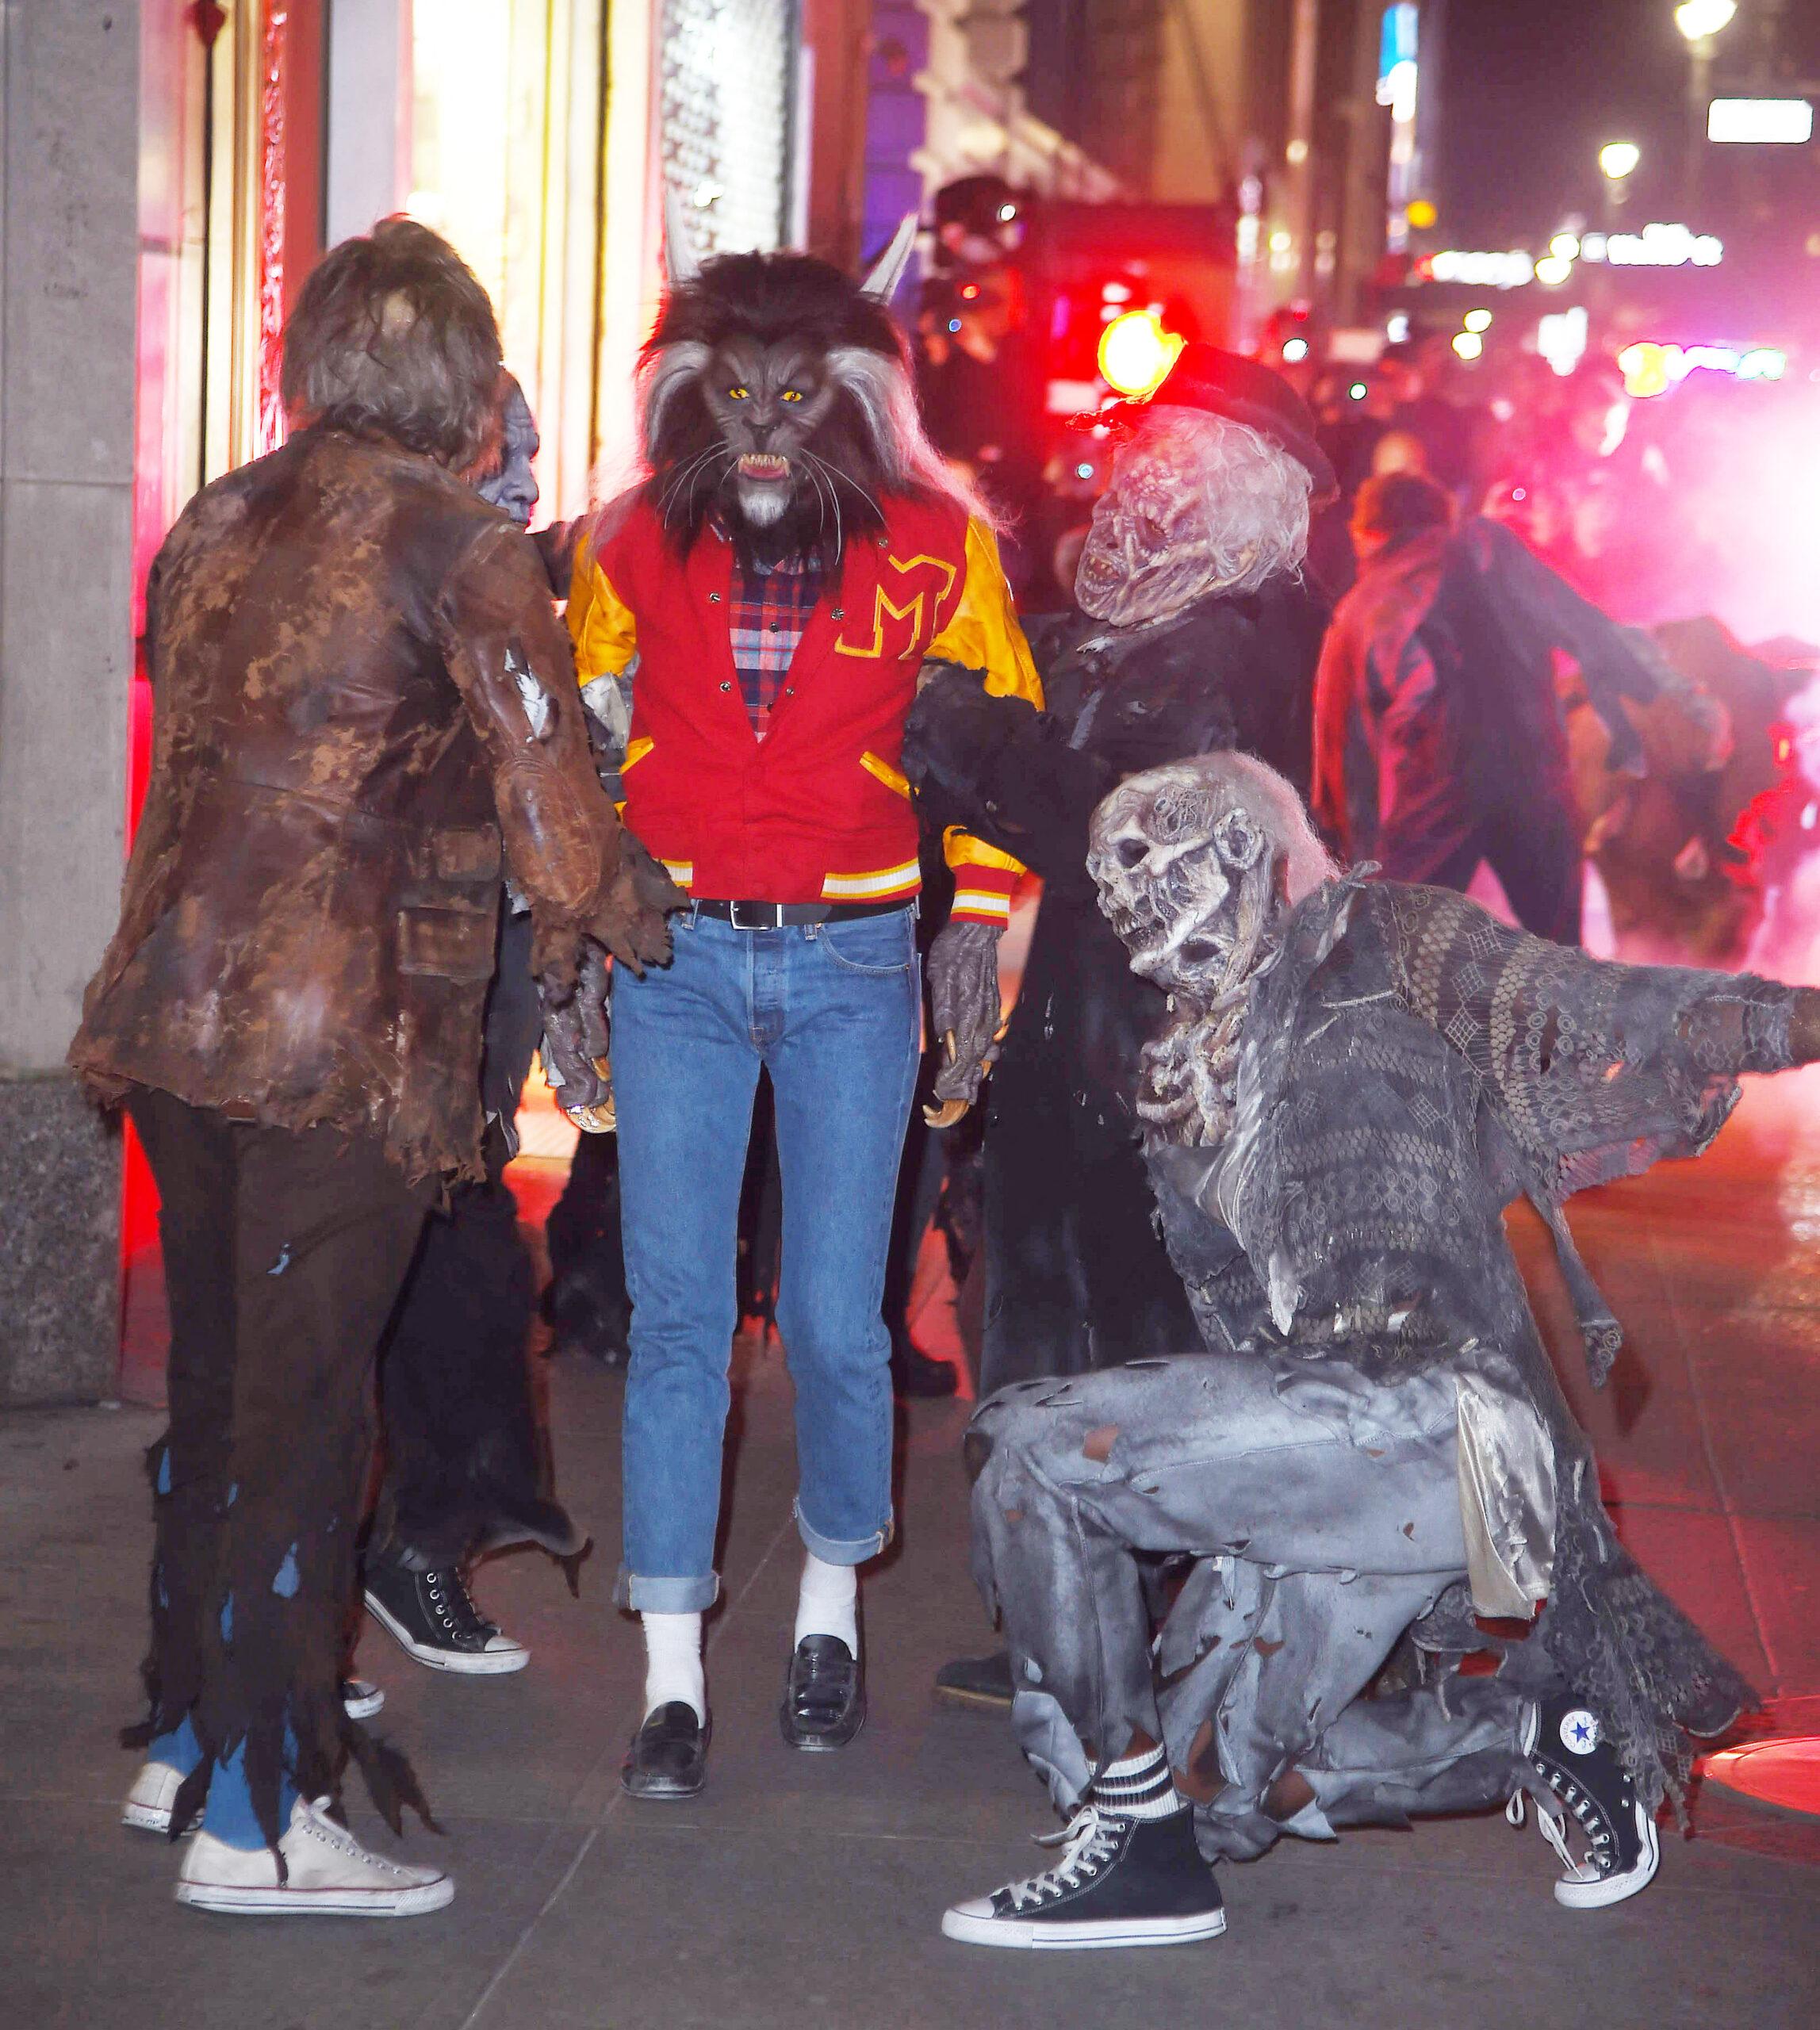 Heidi Klum dressed as Michael Jackson's Thriller Werewolf for her annual Halloween party